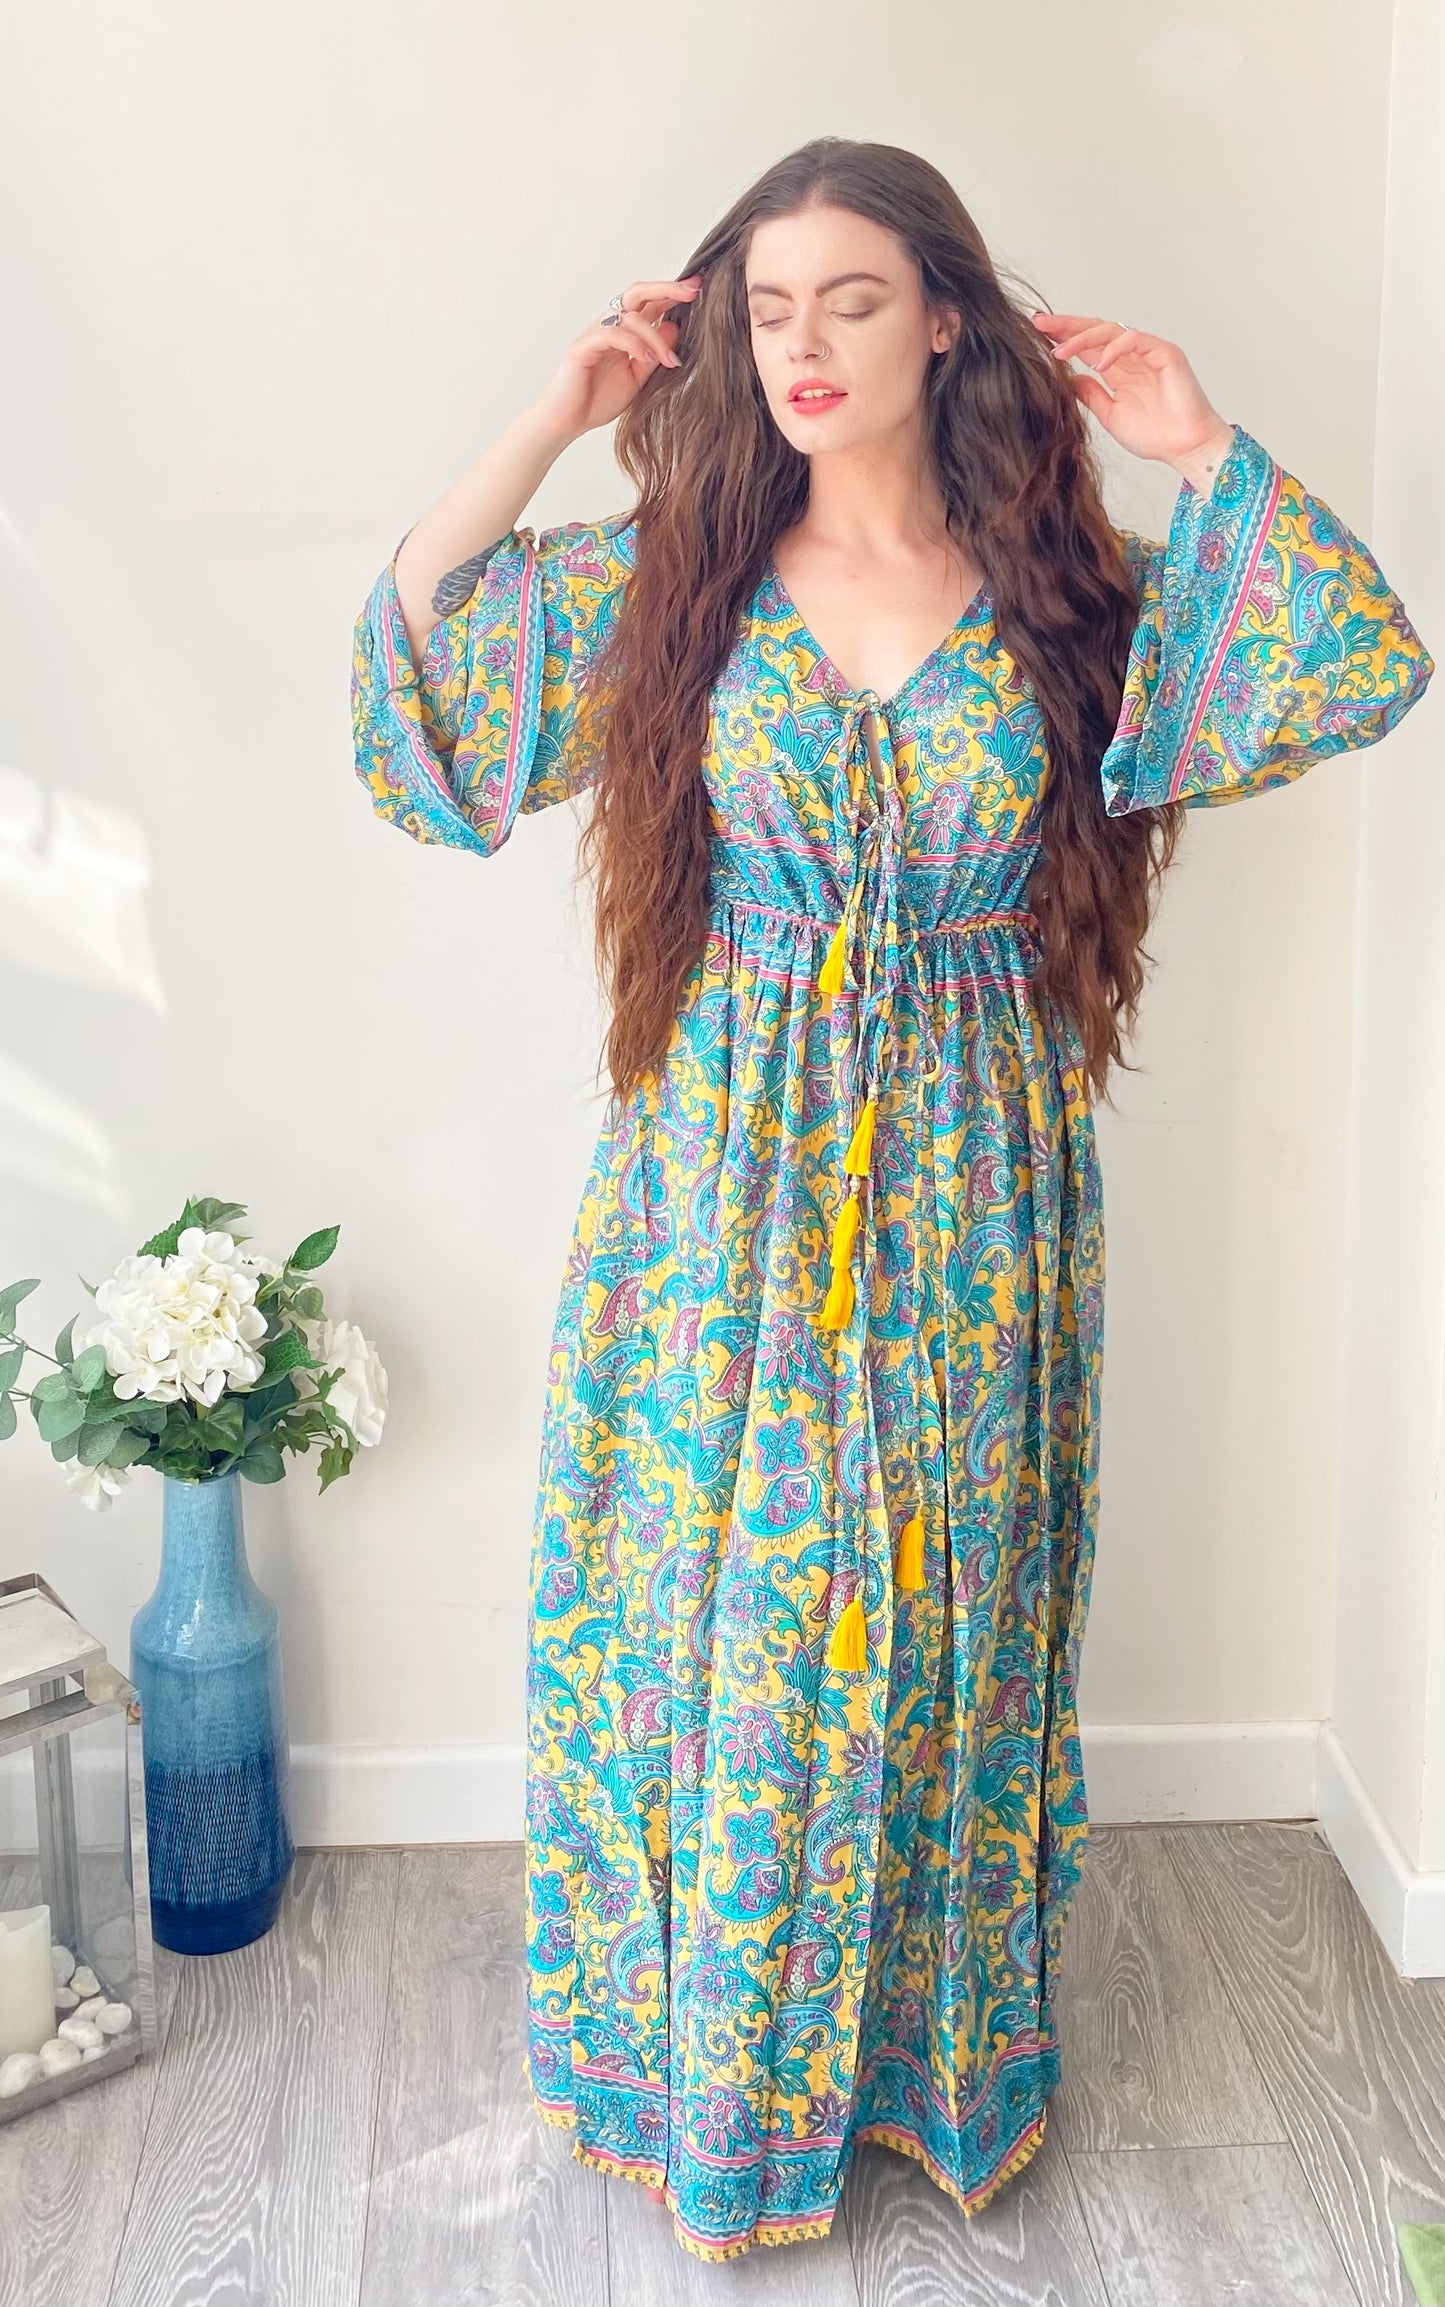 Nova yellow turquoise floral print silk maxi dress free size UK8-16